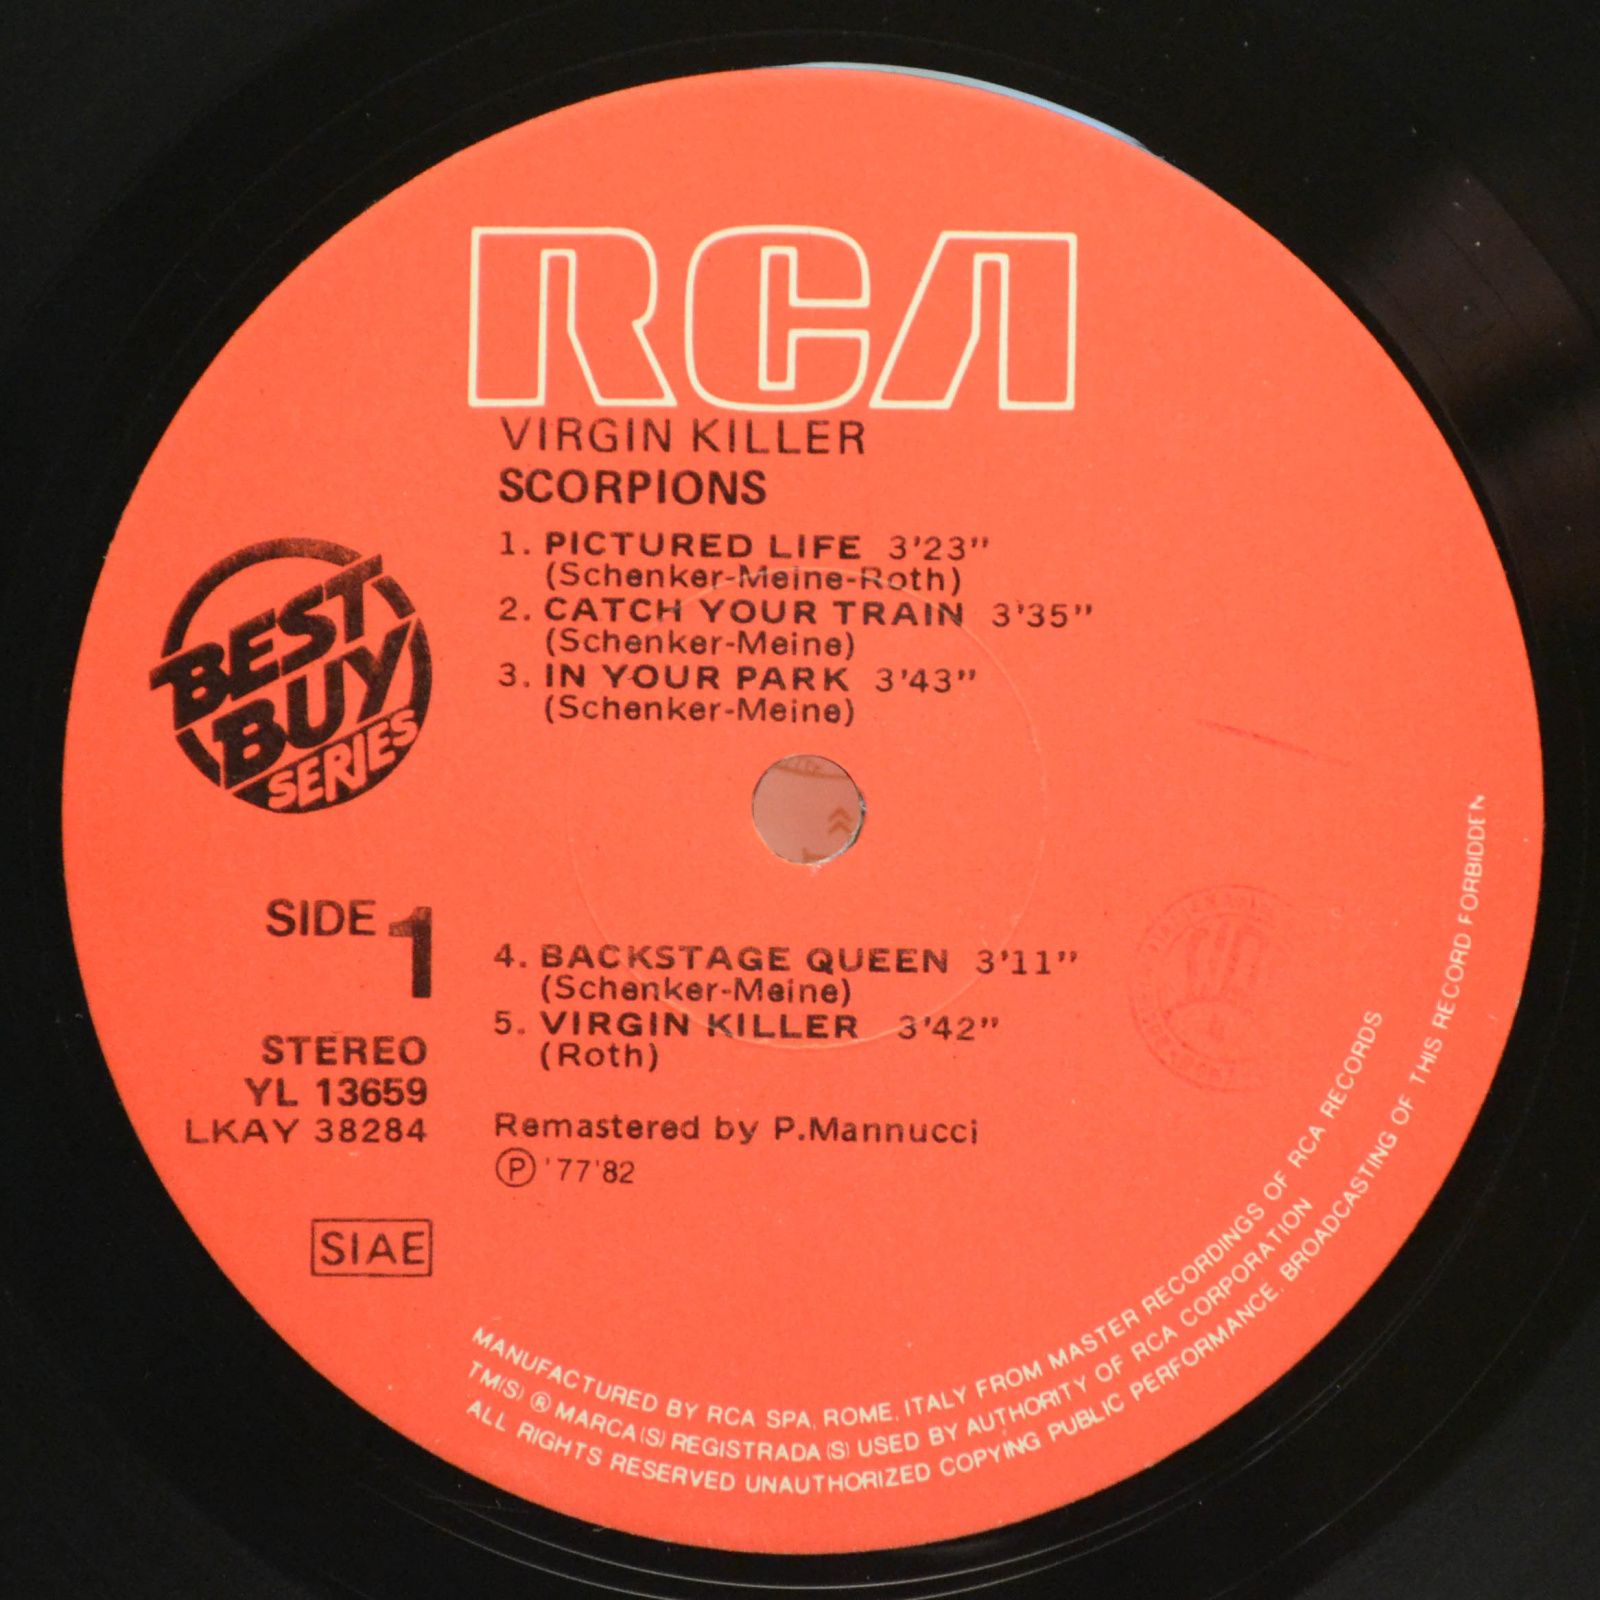 Scorpions — Virgin Killer, 1976